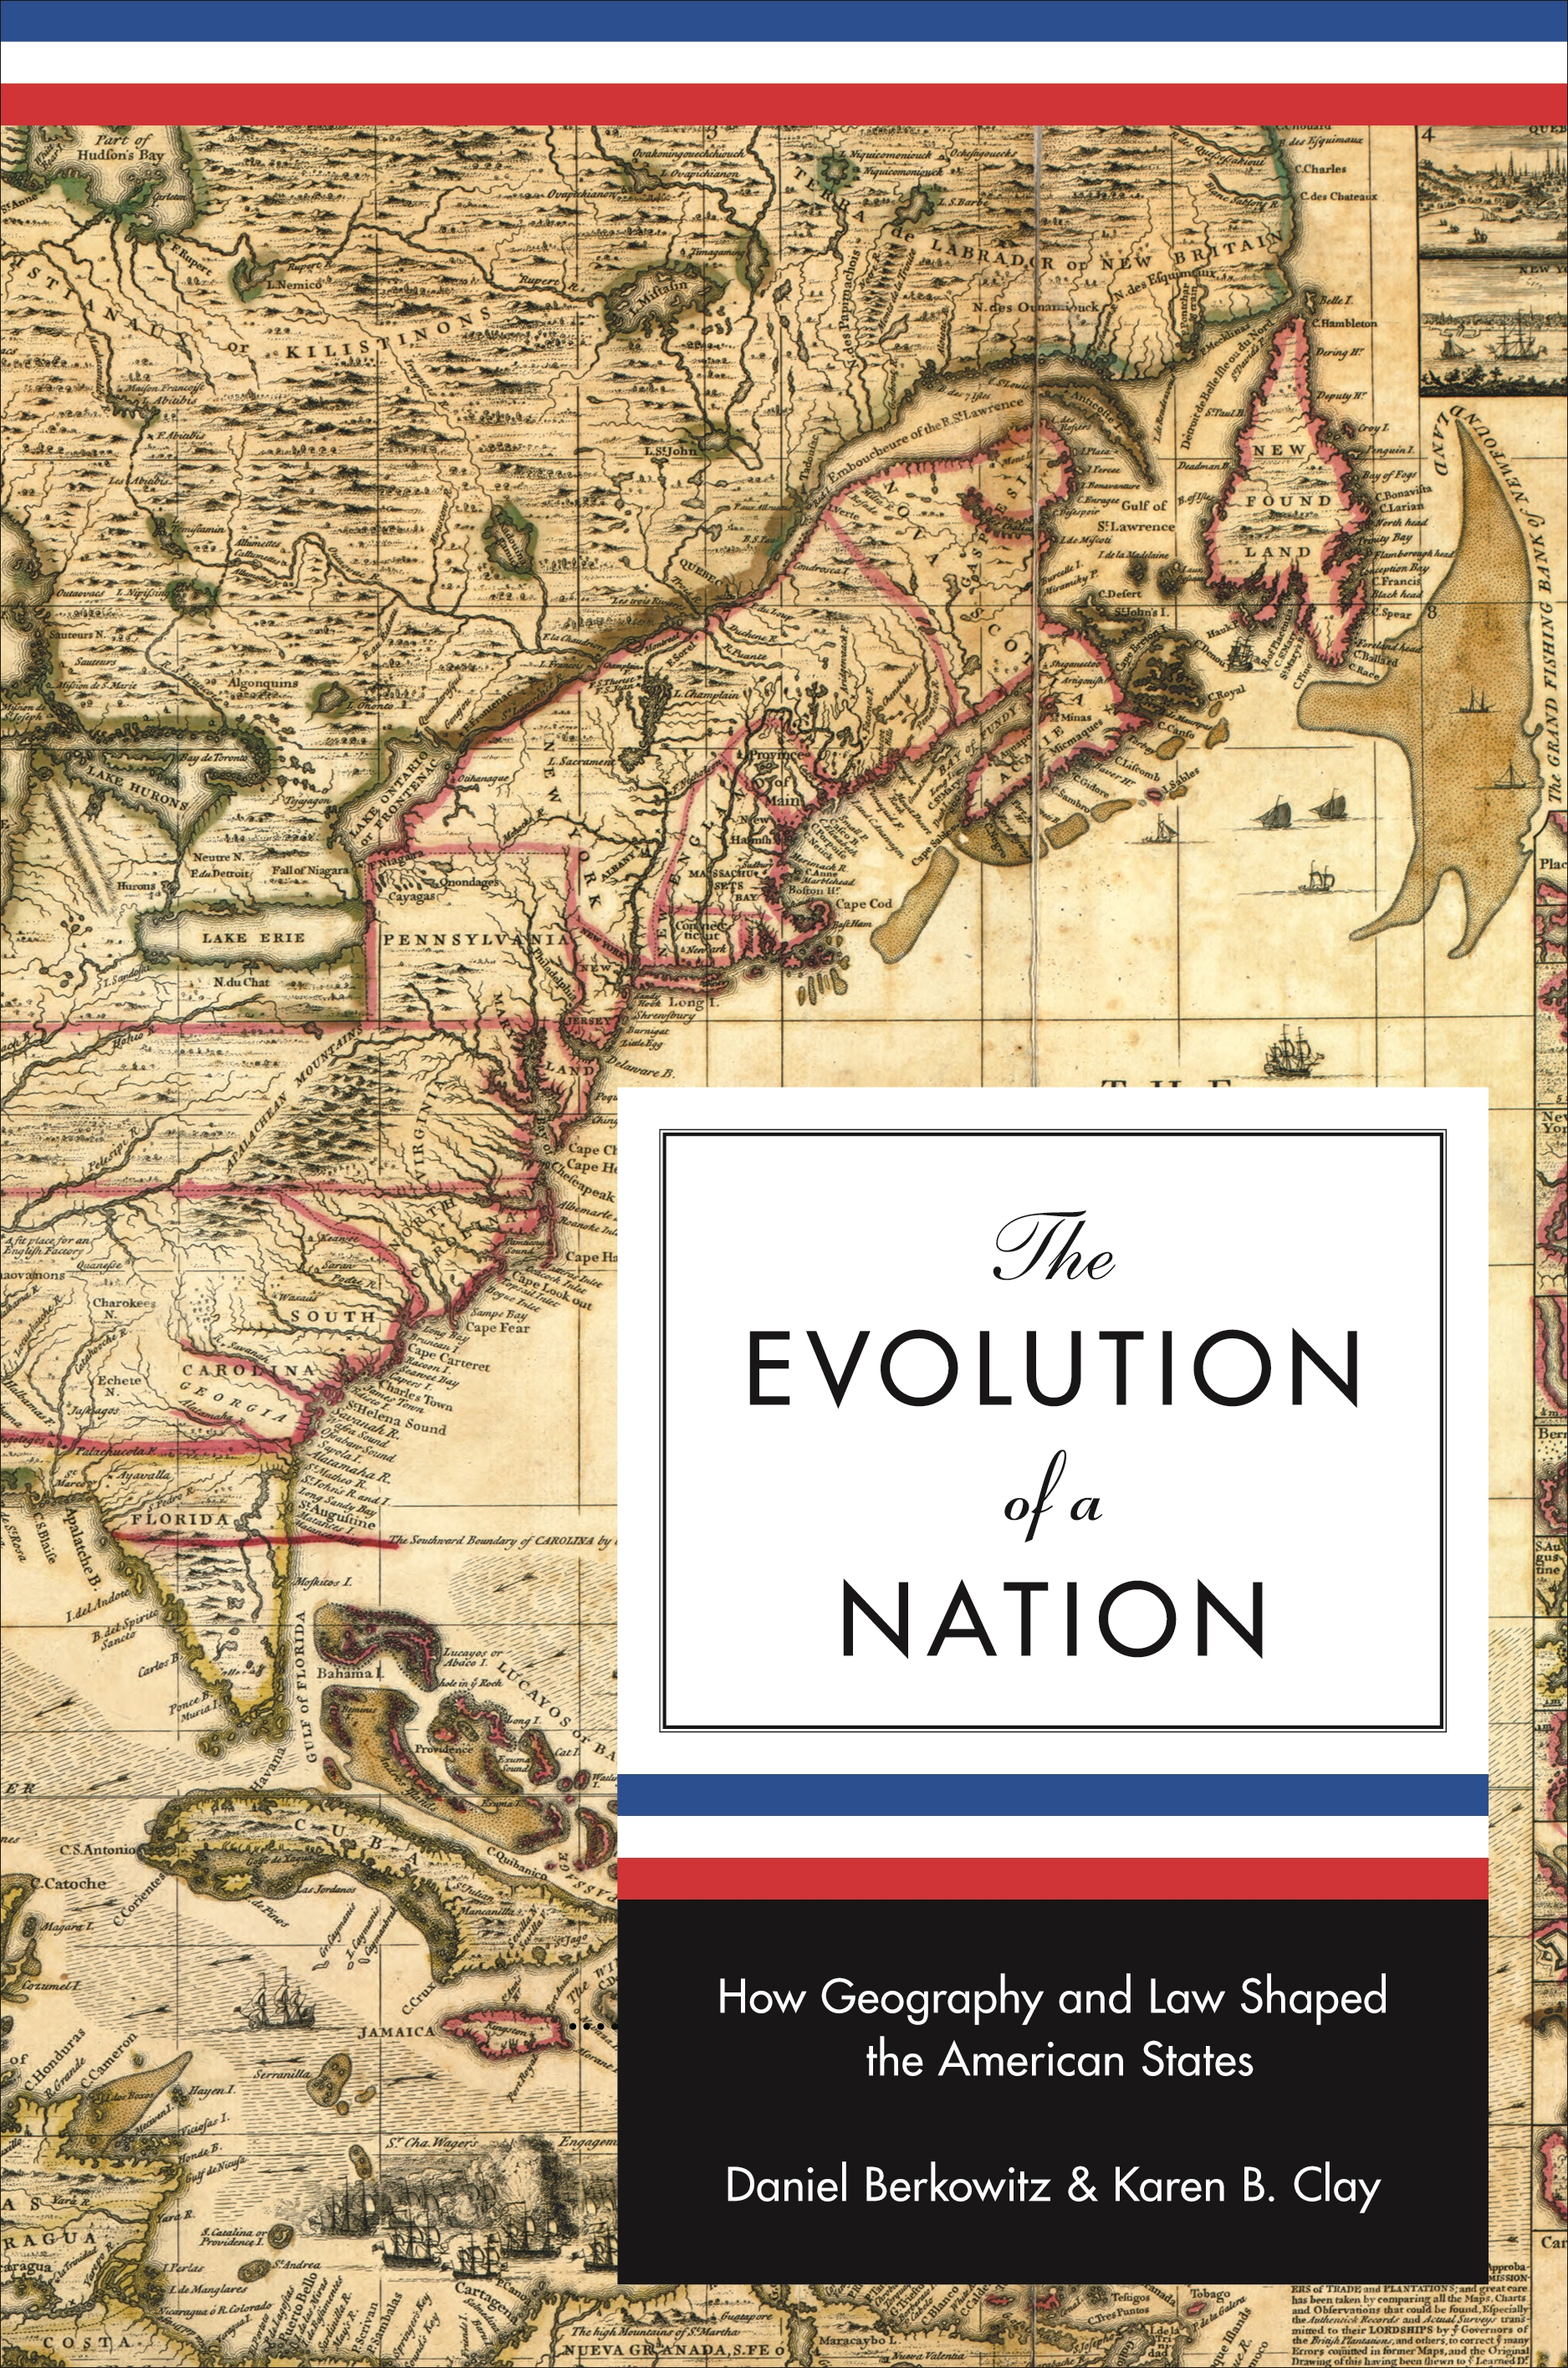 The　Nation　University　Princeton　Evolution　a　of　Press